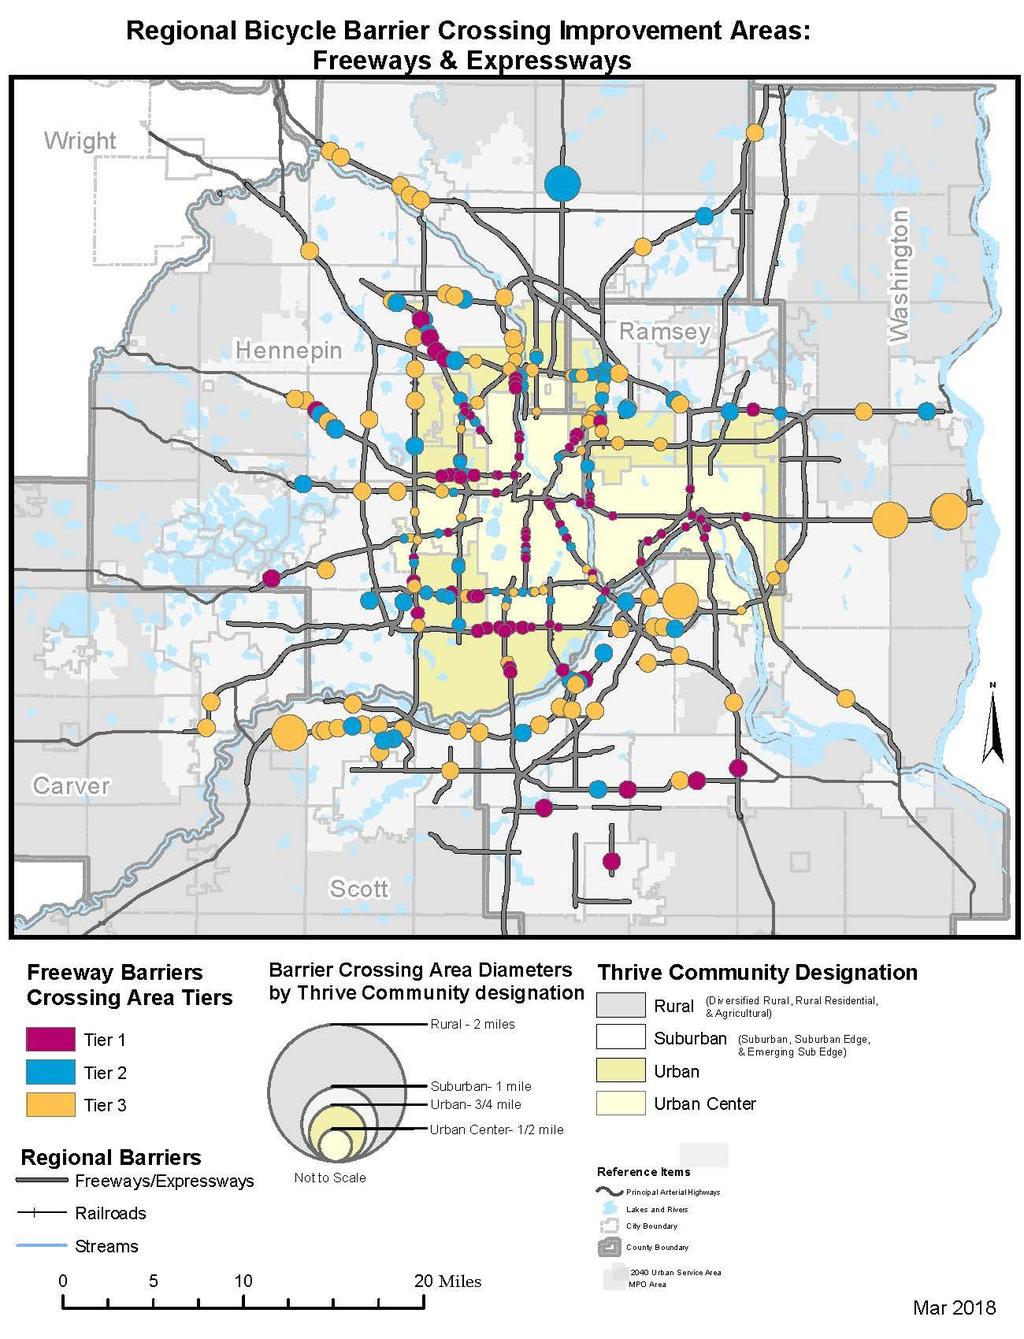 Figure C: Regional Barrier Crossing Improvement Areas - Freeways